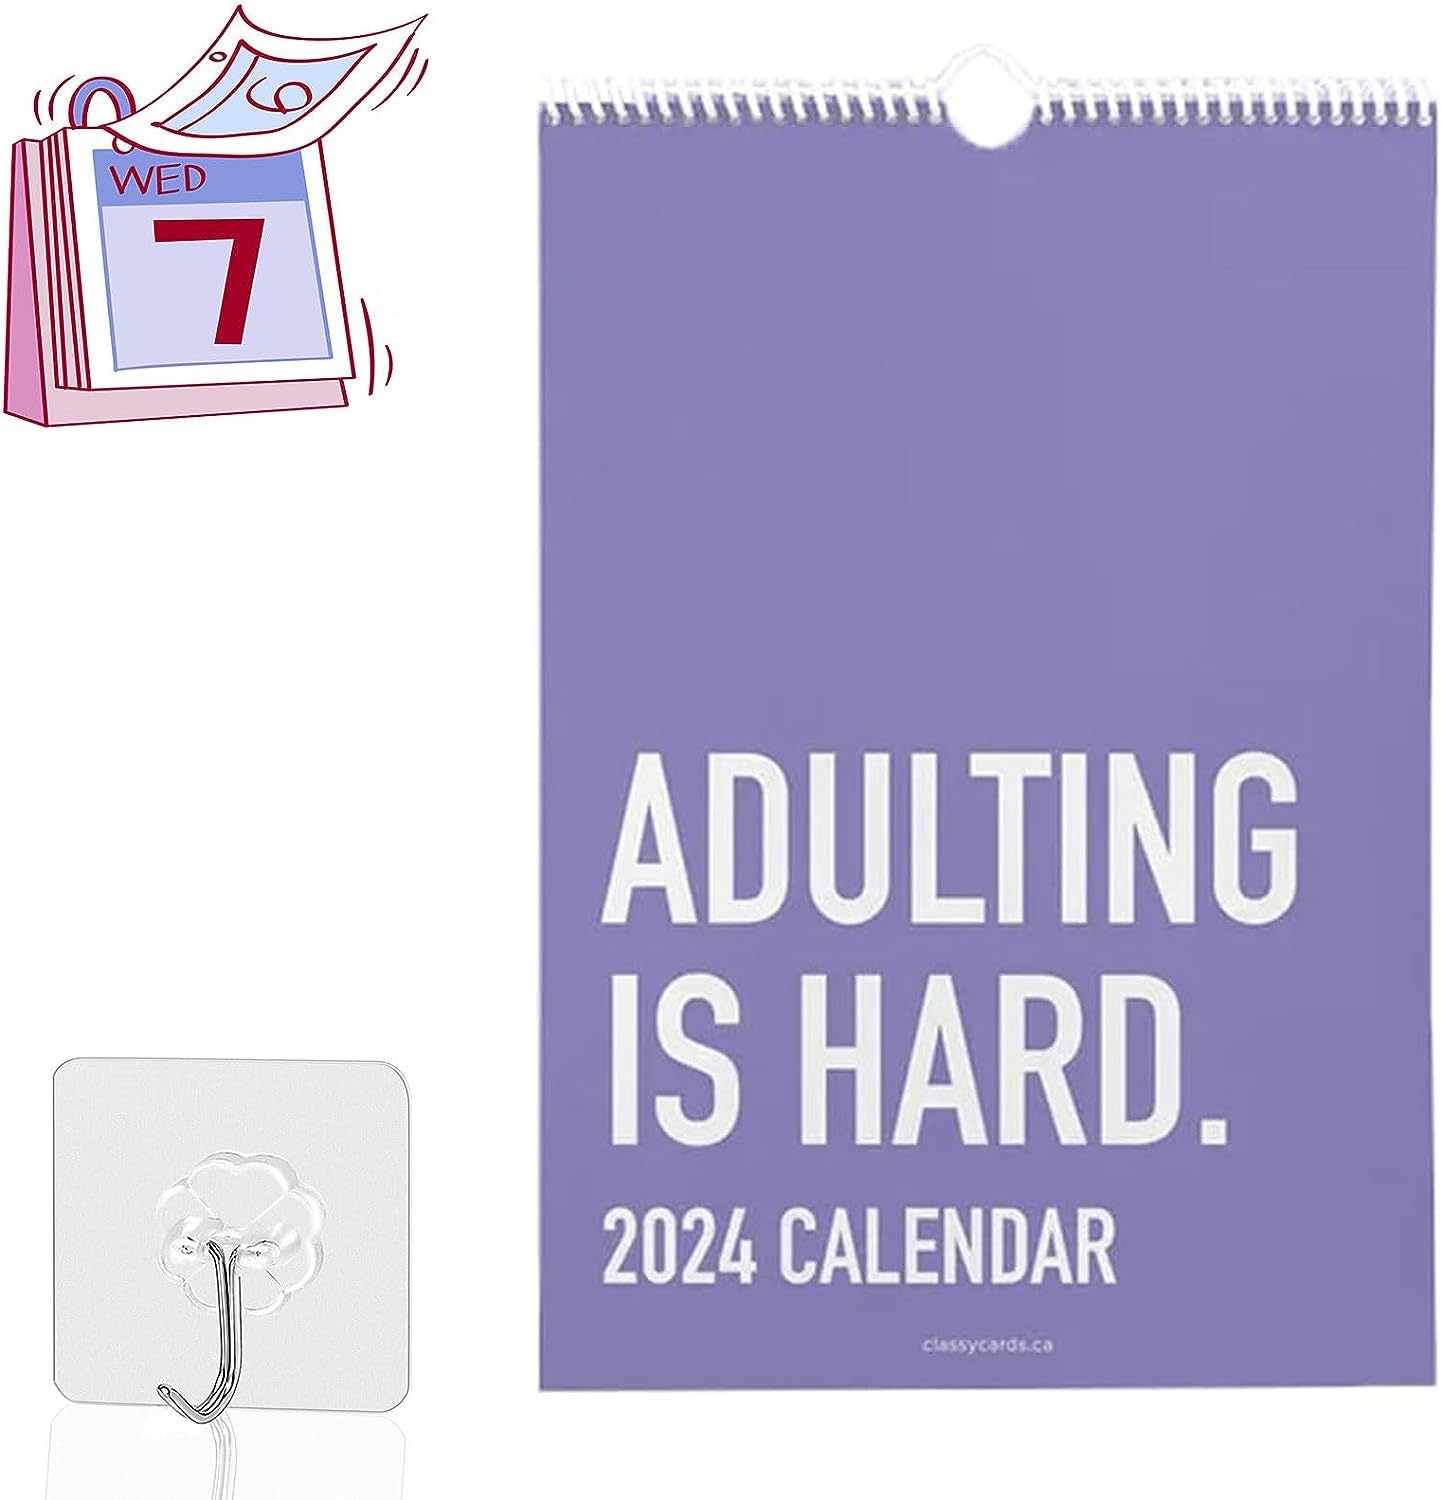 2024 Wall Calendar with "ADULTING IS HARD" Calendar